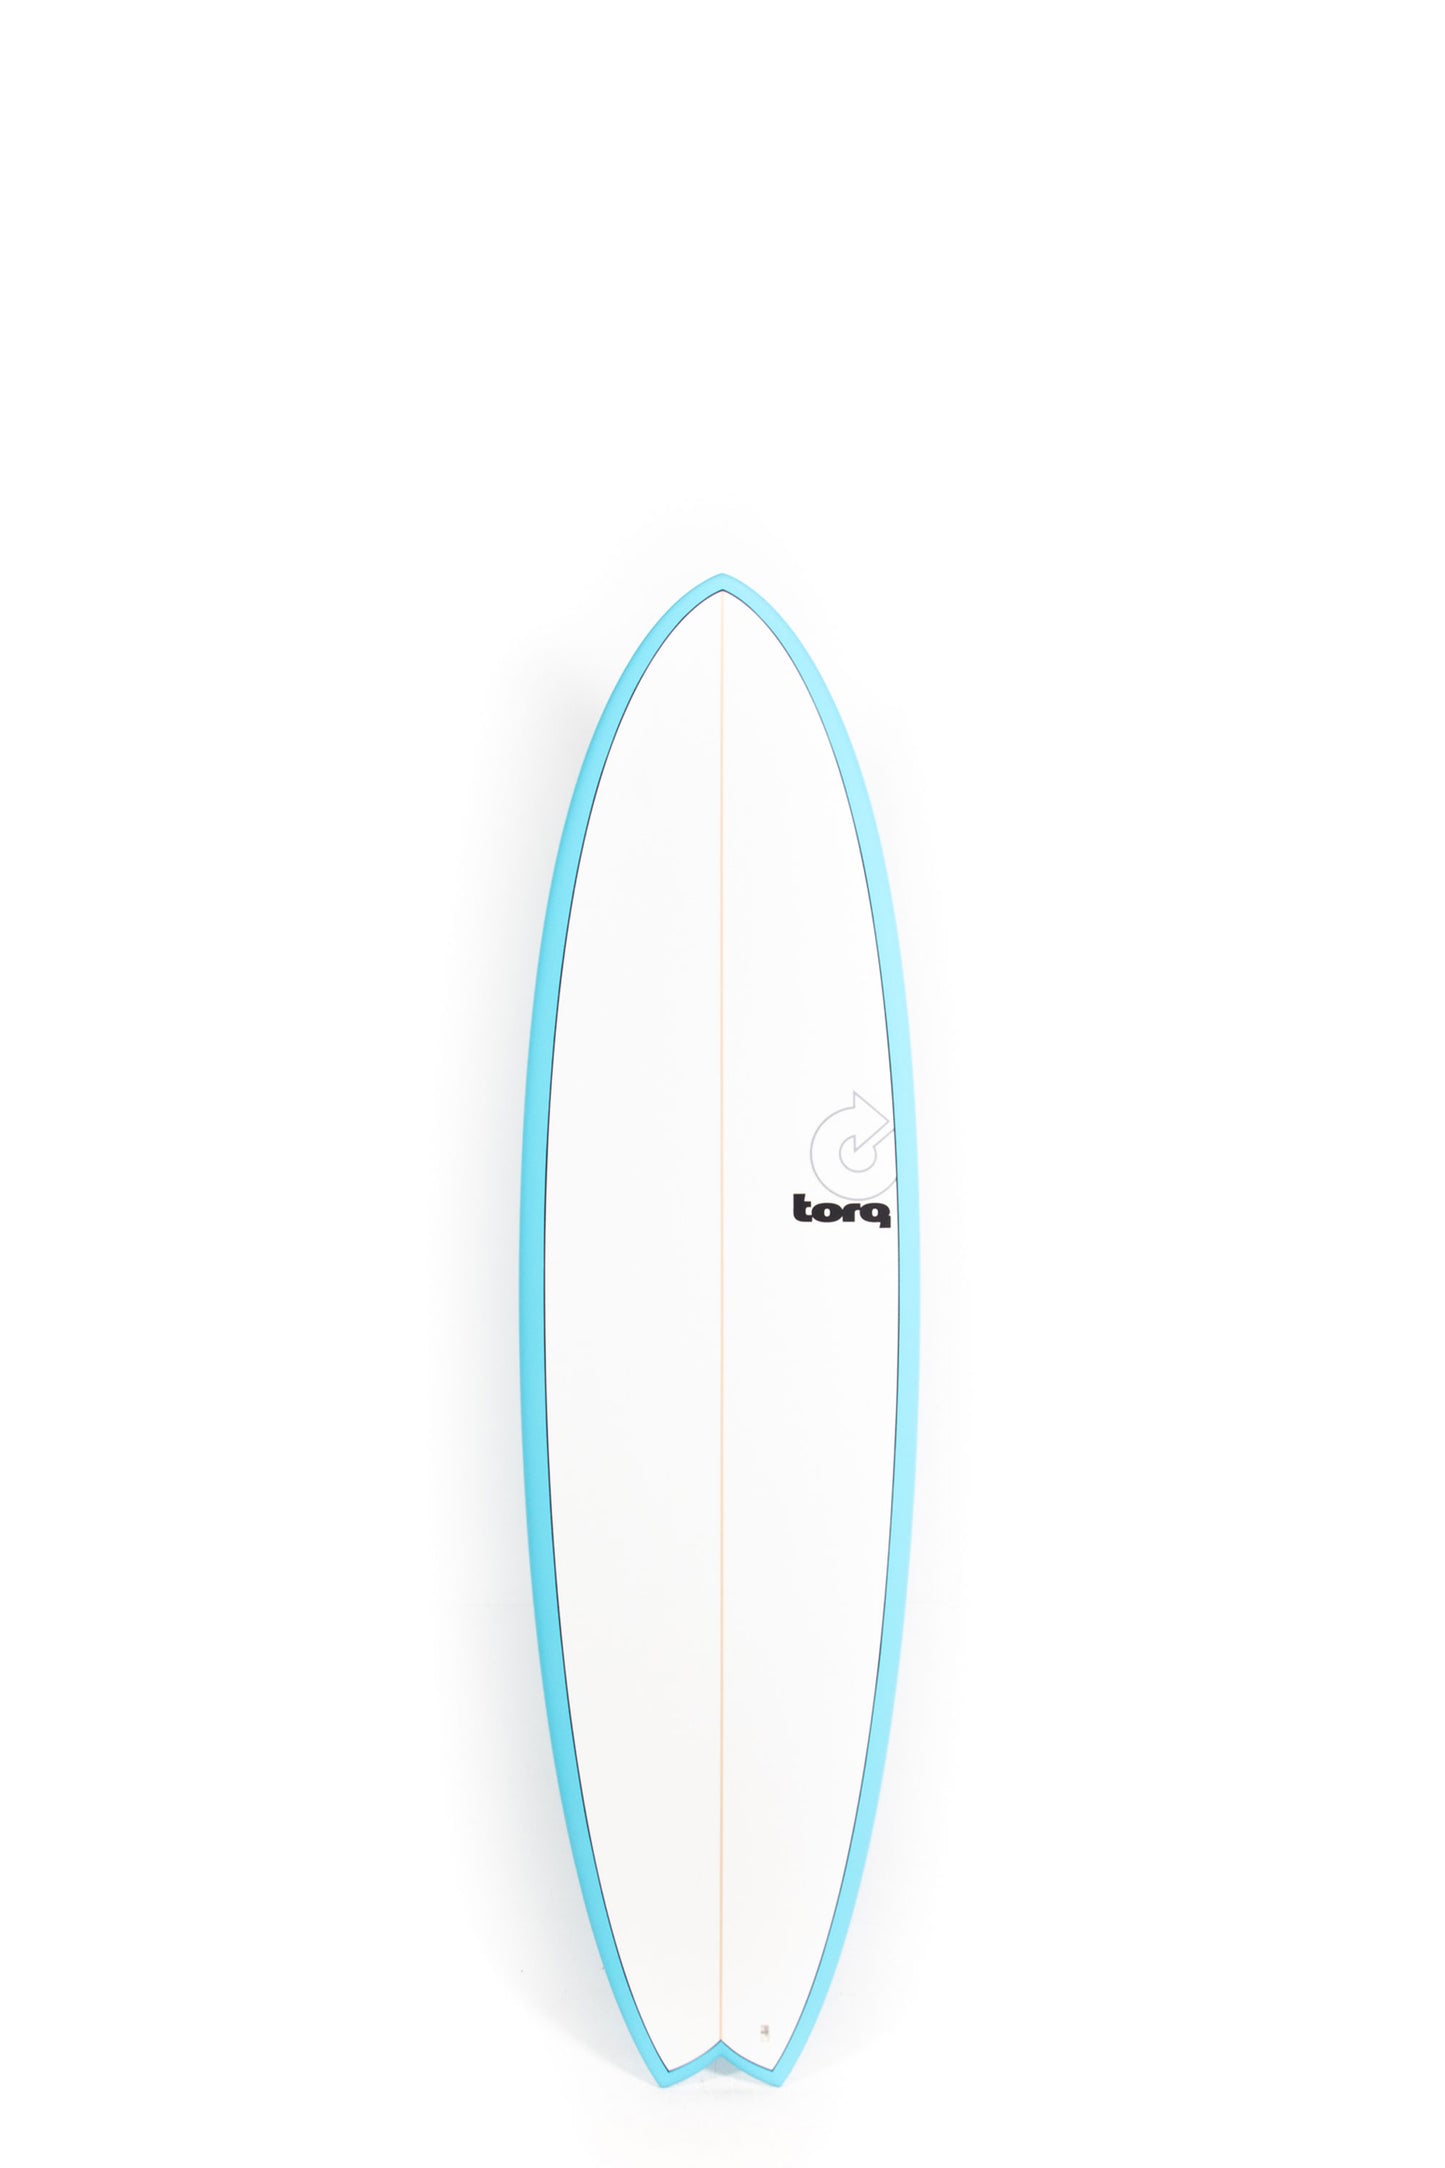 Pukas Surf Shop - Torq Surfboards - MODFISH - 6'10" x 21 3/4 x 2 3/4 - 46L